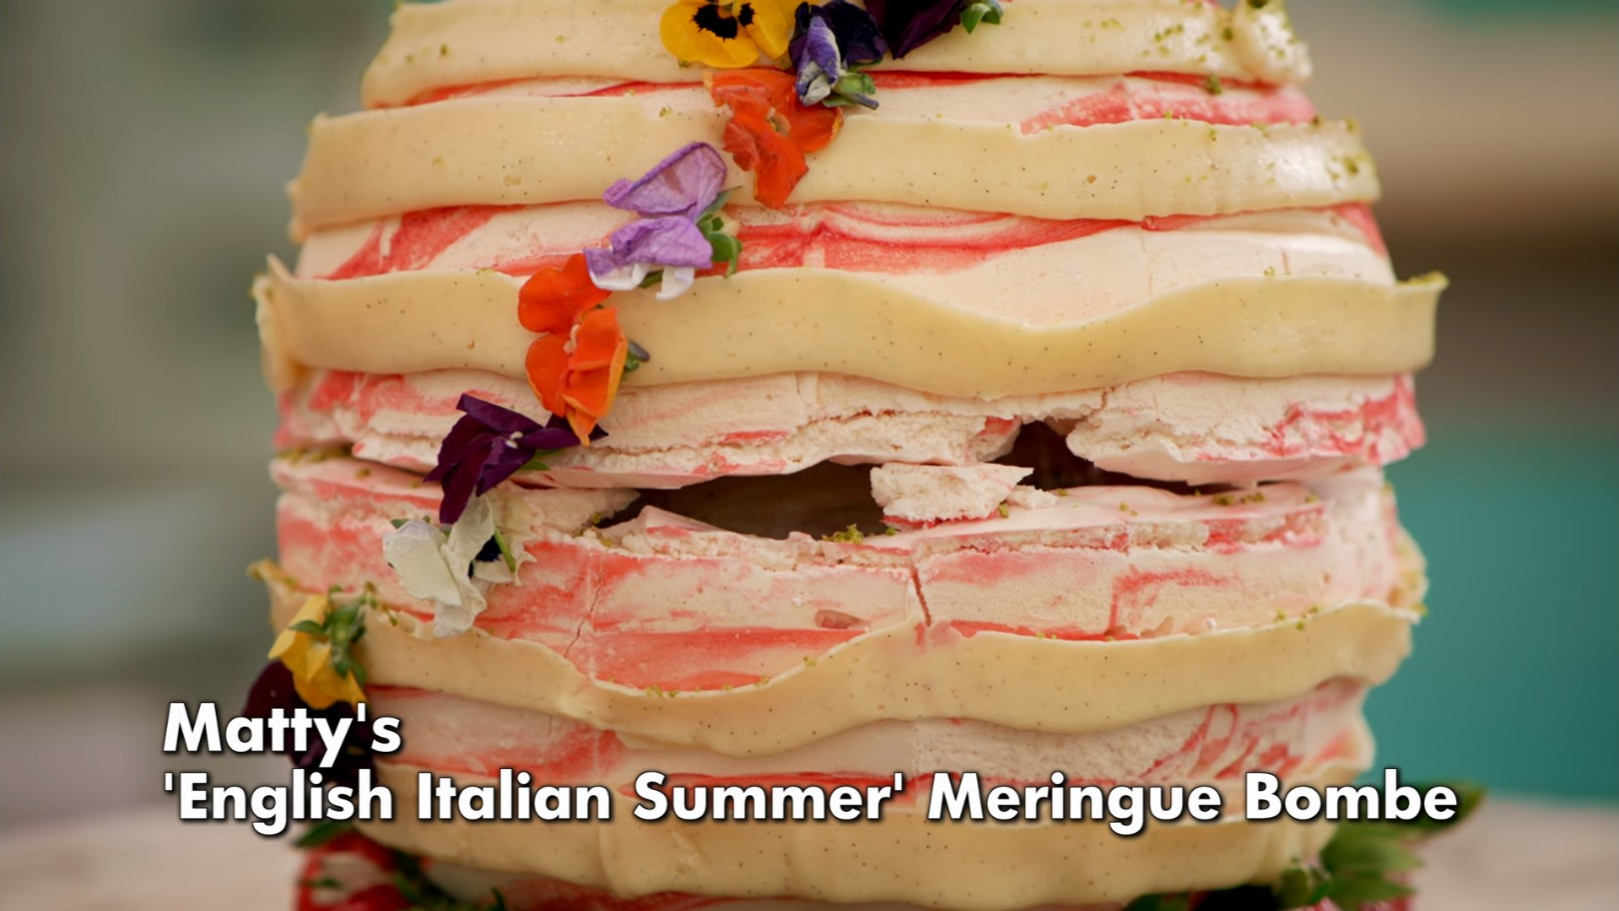 Matty's English Italian Summer Meringue Bombe Showstopper from 'The Great British Baking Show' Season 14's Desserts Week 